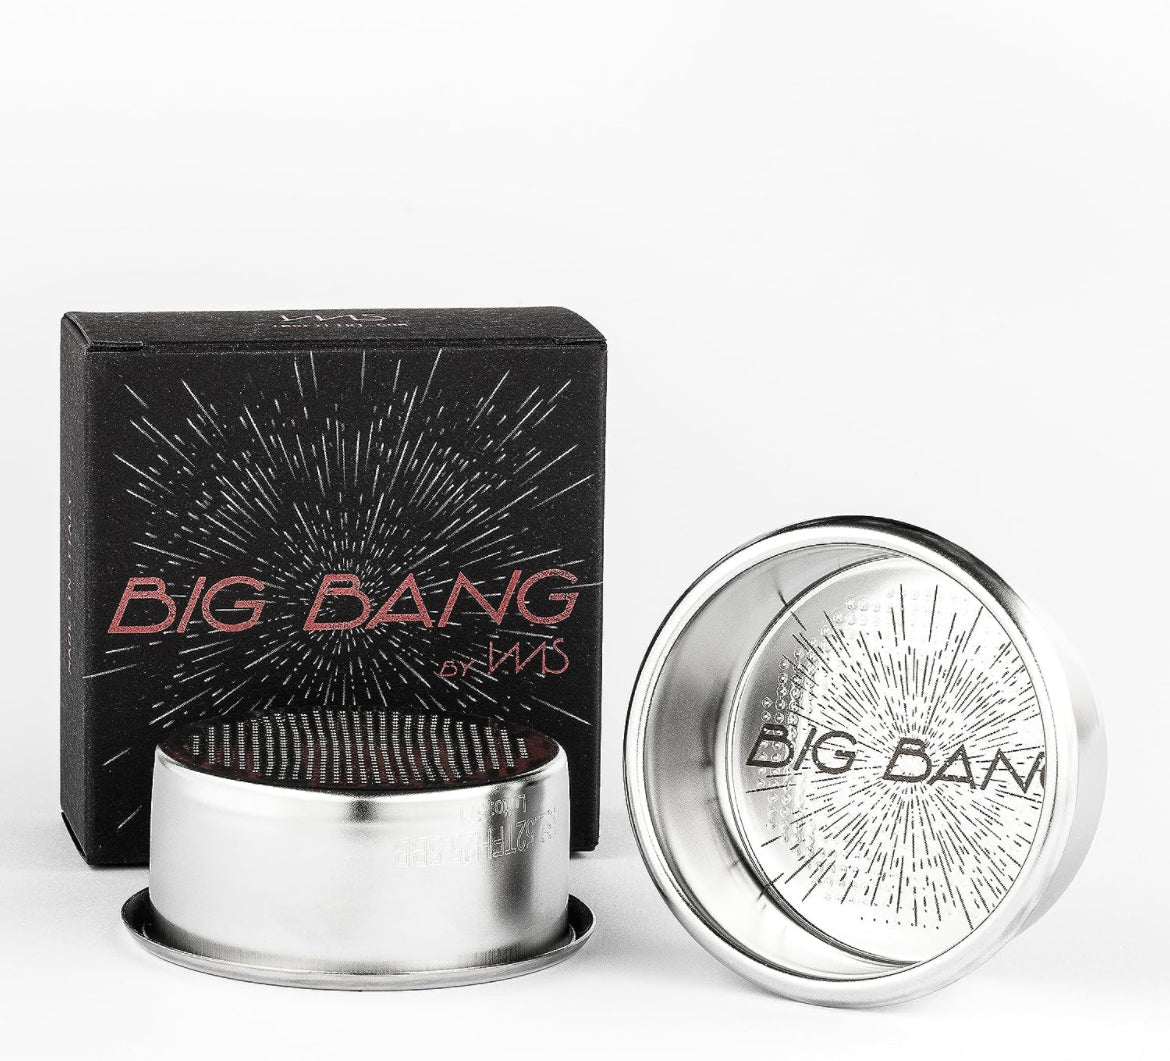 IMS Big Bang Präzisions-Filterkorb für 58 mm Siebträger 23.5 mm hoch - Coffee Coaching Club